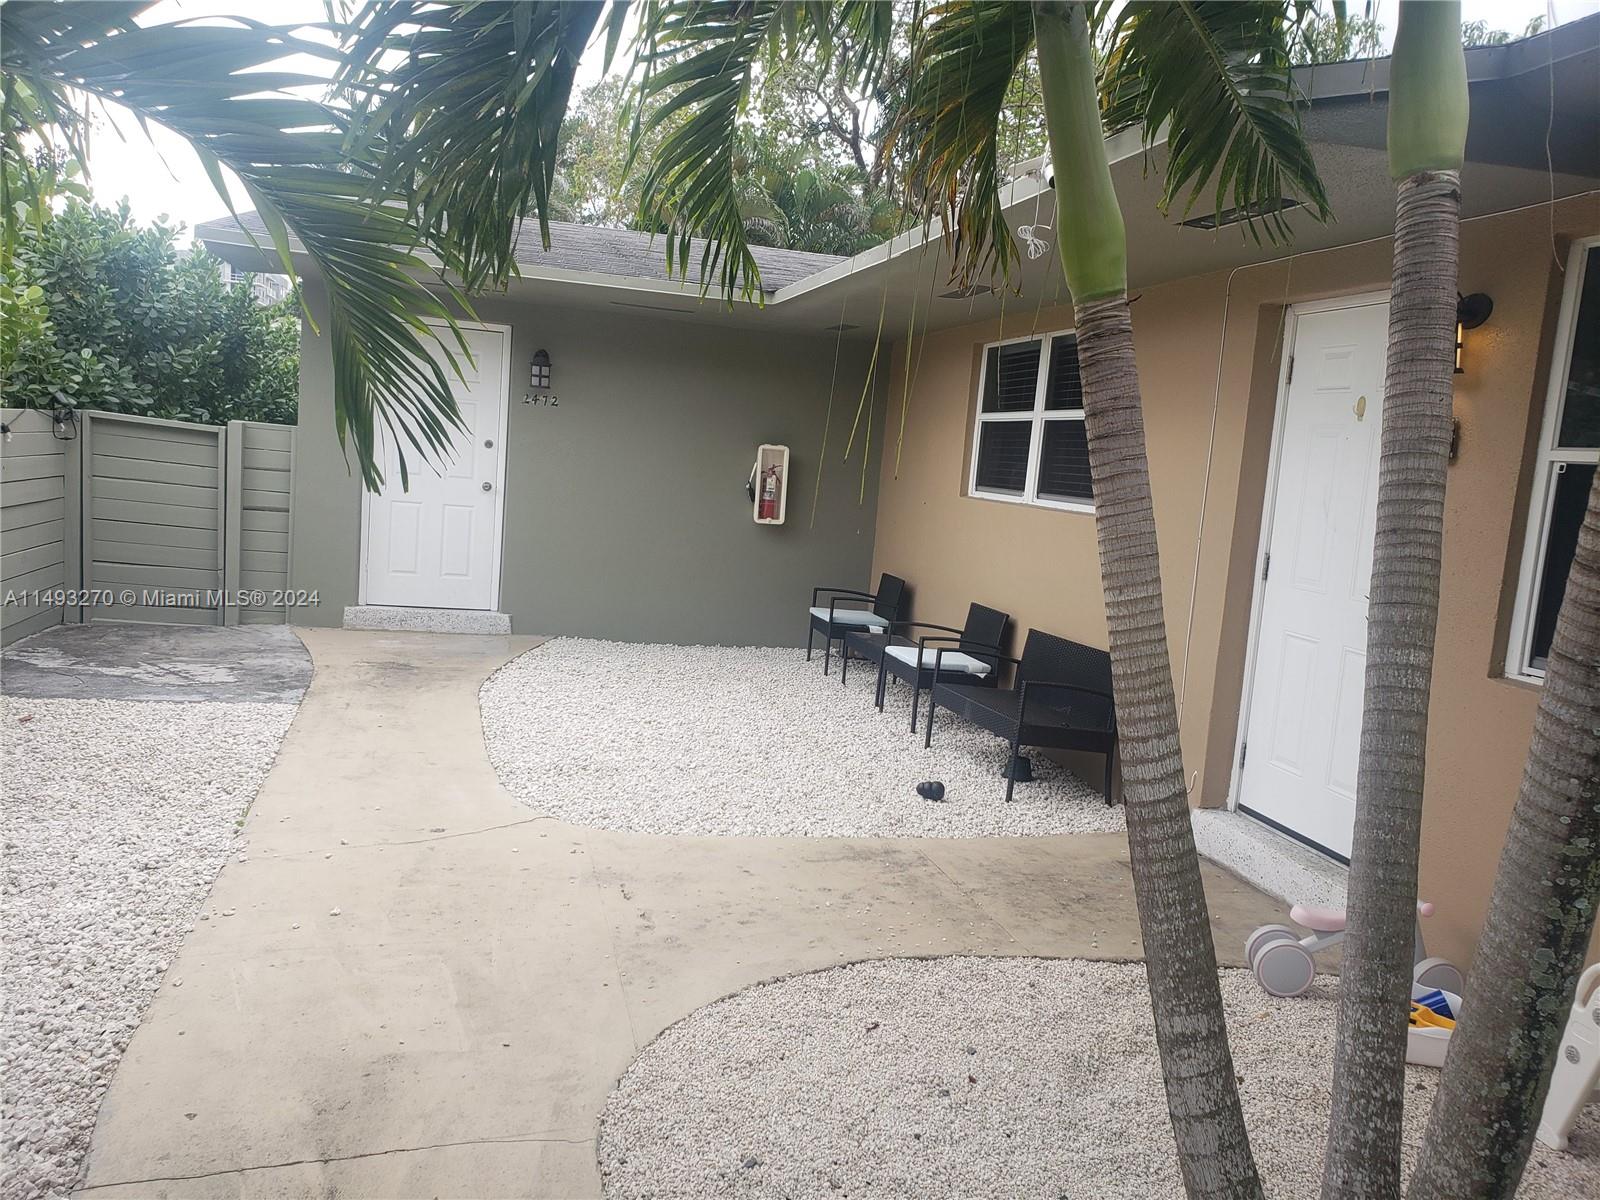 Rental Property at 2470 Ne 182nd Ter, North Miami Beach, Miami-Dade County, Florida -  - $759,000 MO.